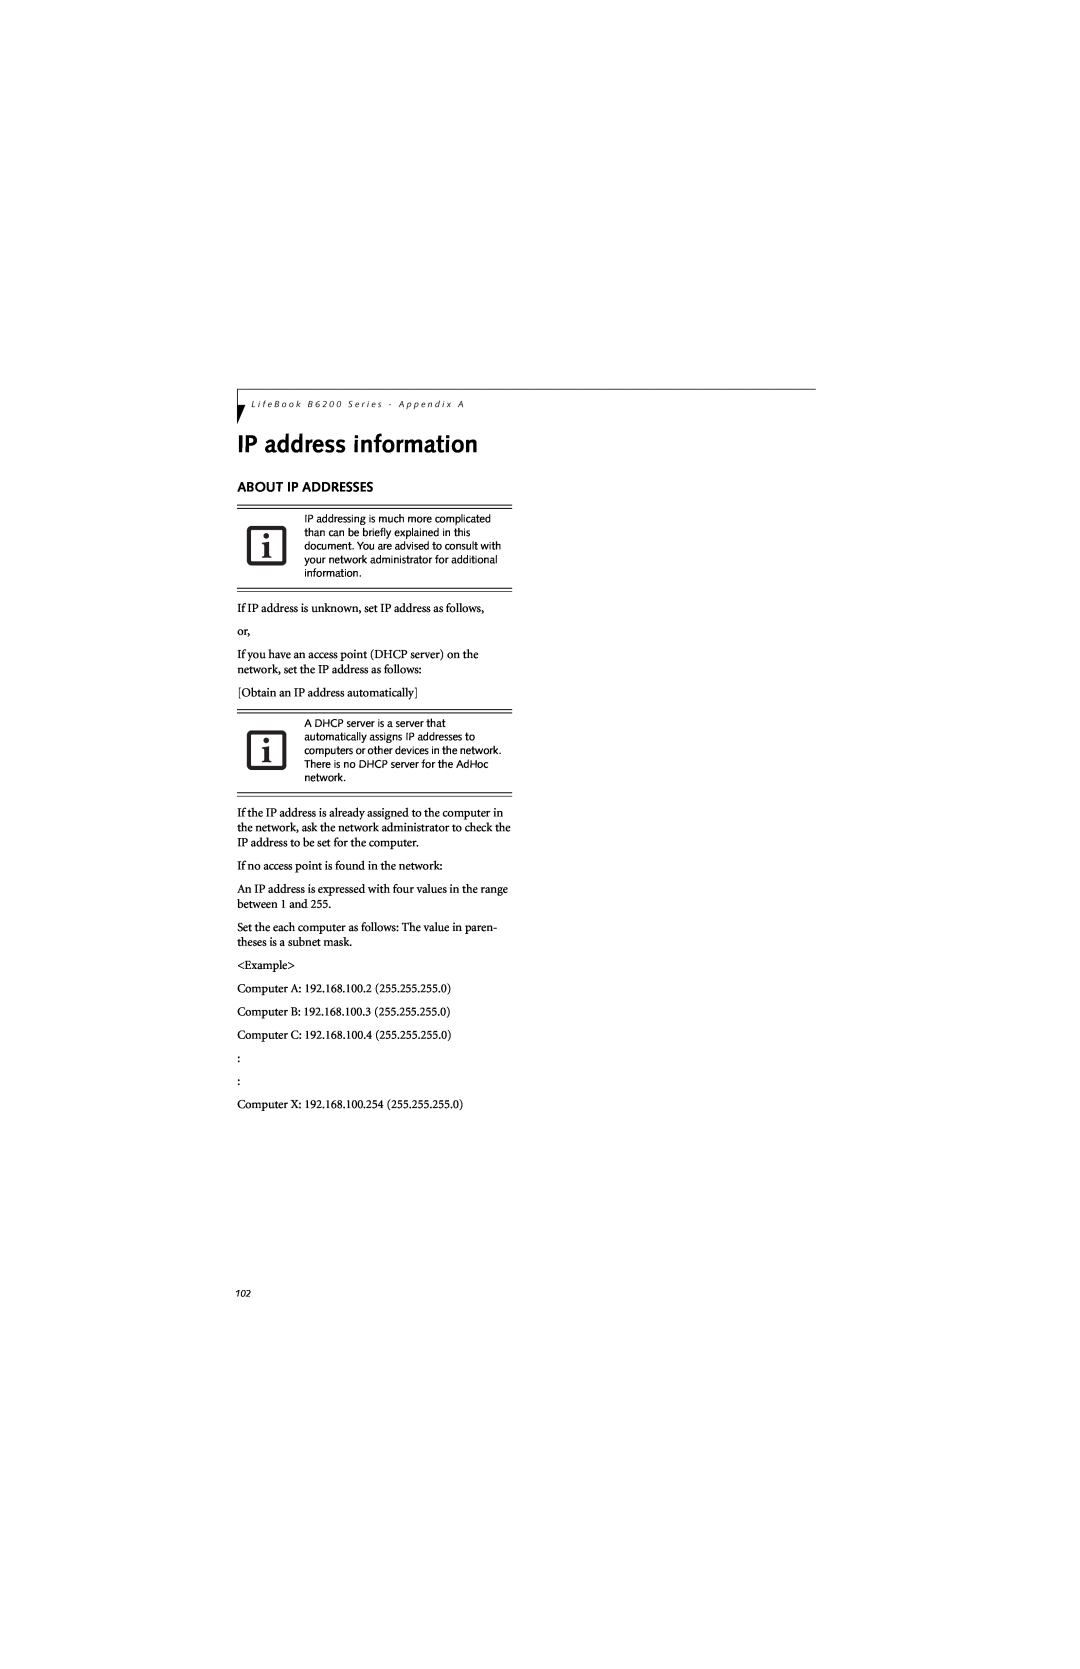 Fujitsu B6220 manual IP address information, About Ip Addresses 